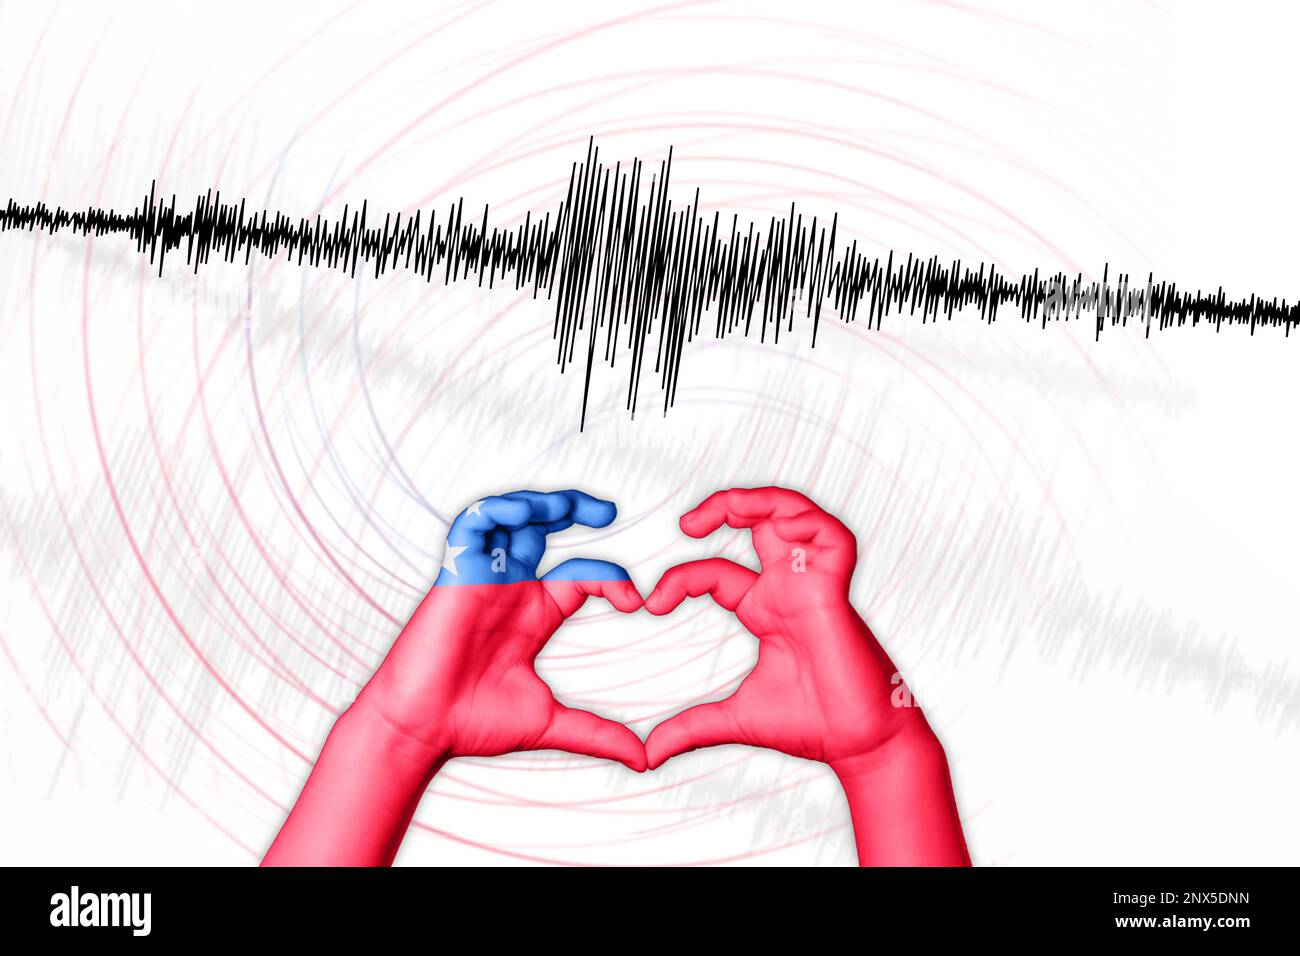 Seismic activity earthquake Samoa symbol of heart Richter scale Stock Photo